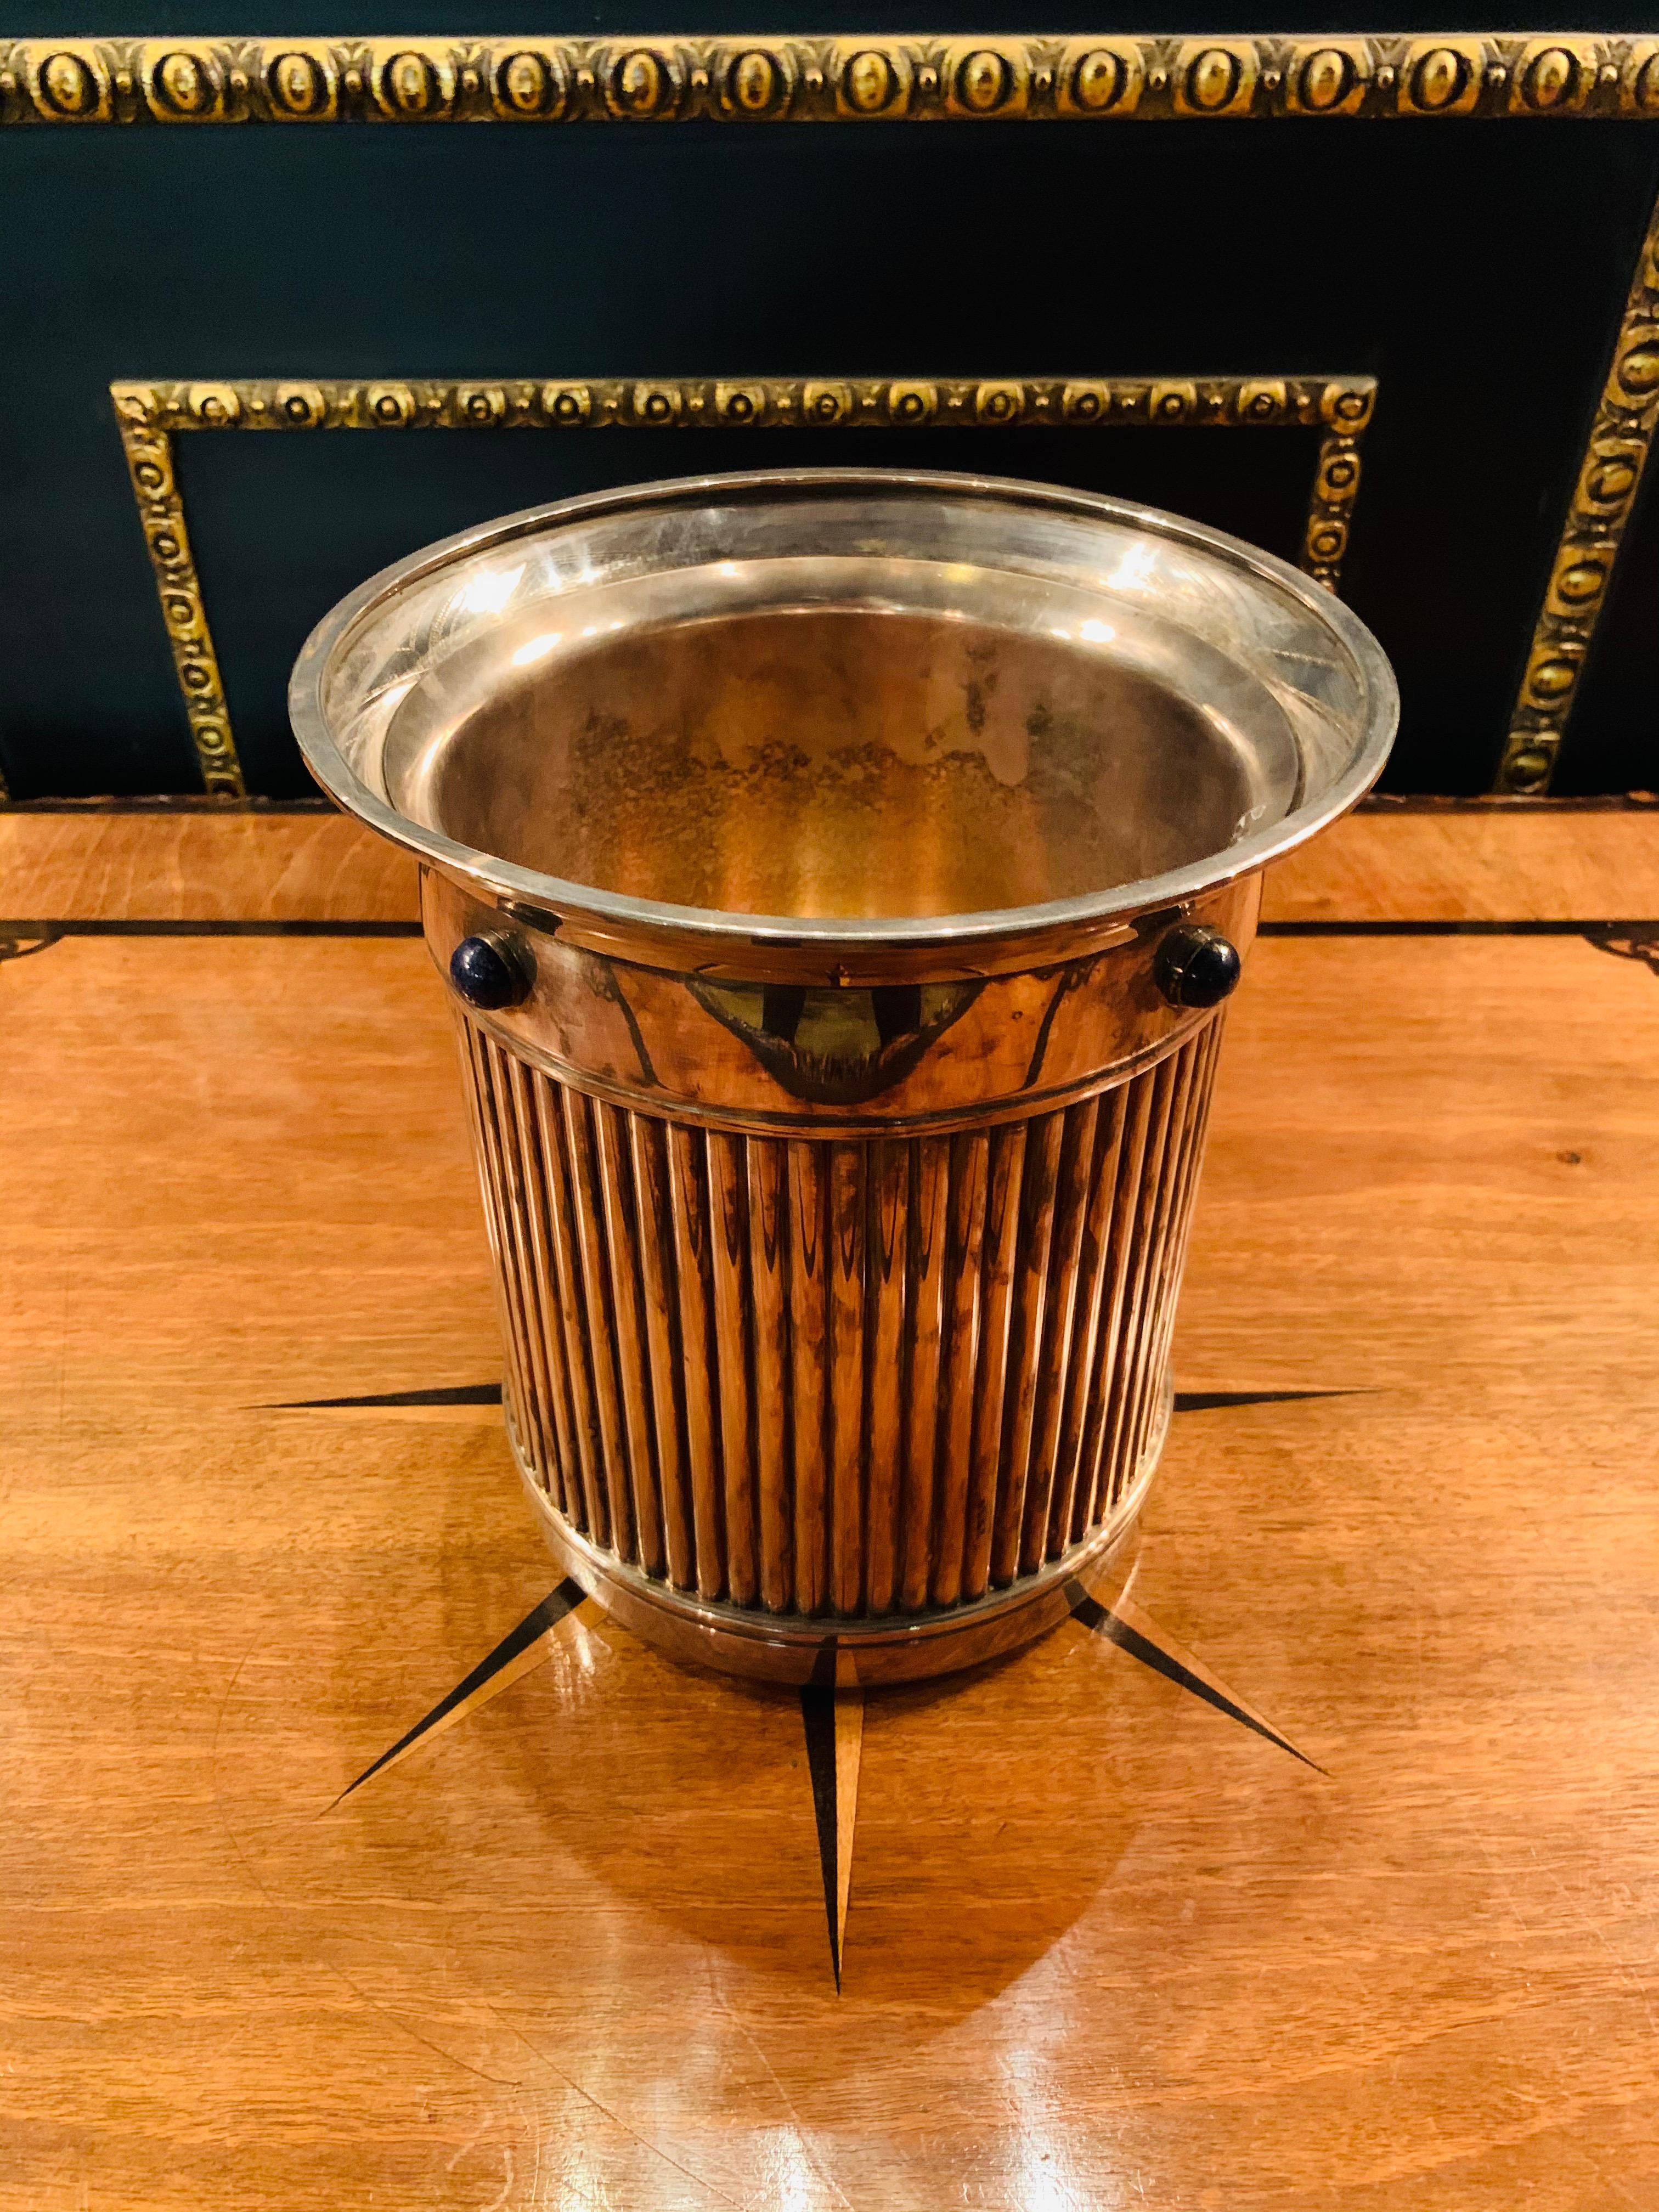 Art Nouveau Original Cartier Ice Bucket with Insert Framed with Lapis Lazuli Stones